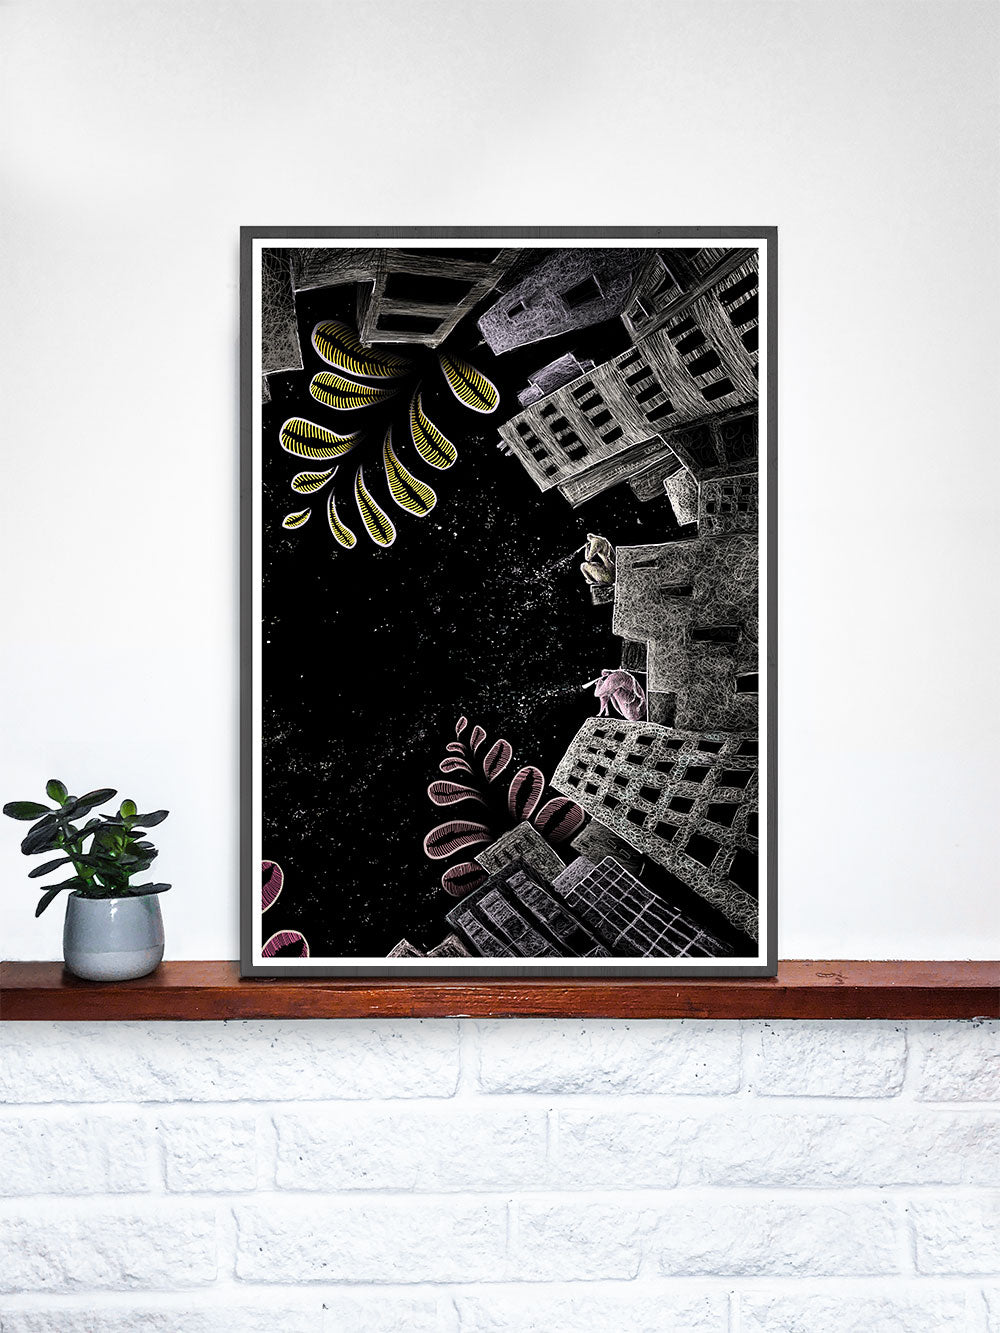 Night Jungle City Illustration Print in a frame on a shelf